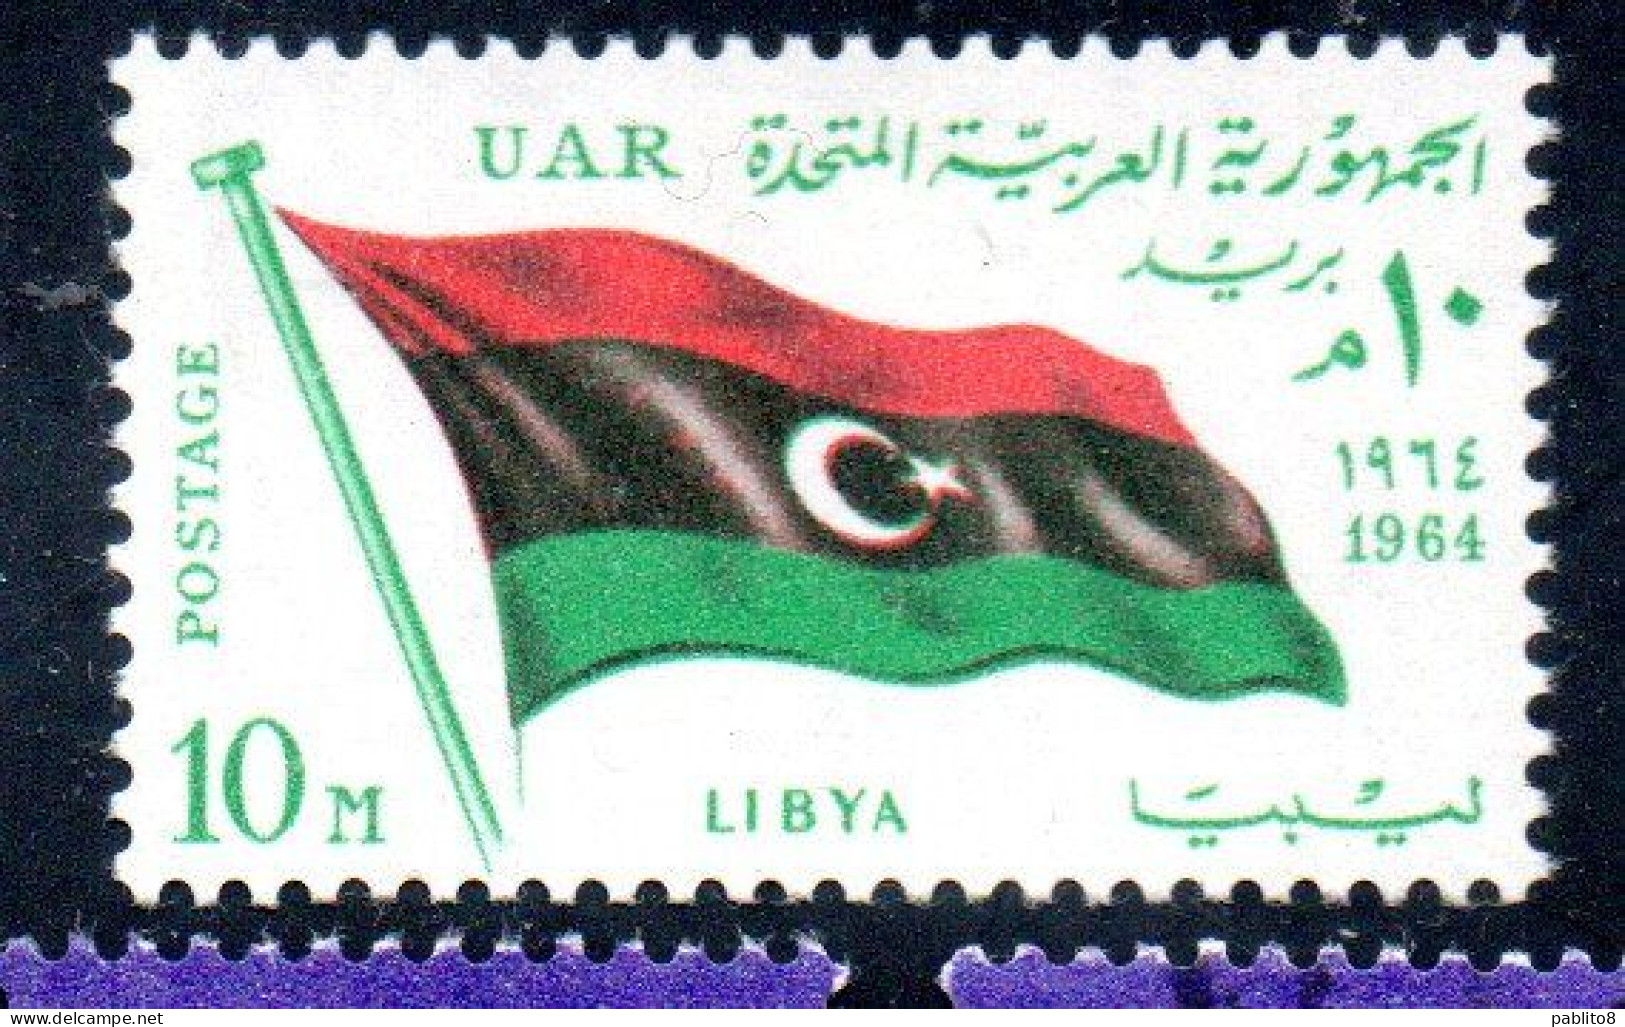 UAR EGYPT EGITTO 1964 SECOND MEETING OF HEADS STATE ARAB LEAGUE FLAG OF LIBYA 10m  MH - Ongebruikt